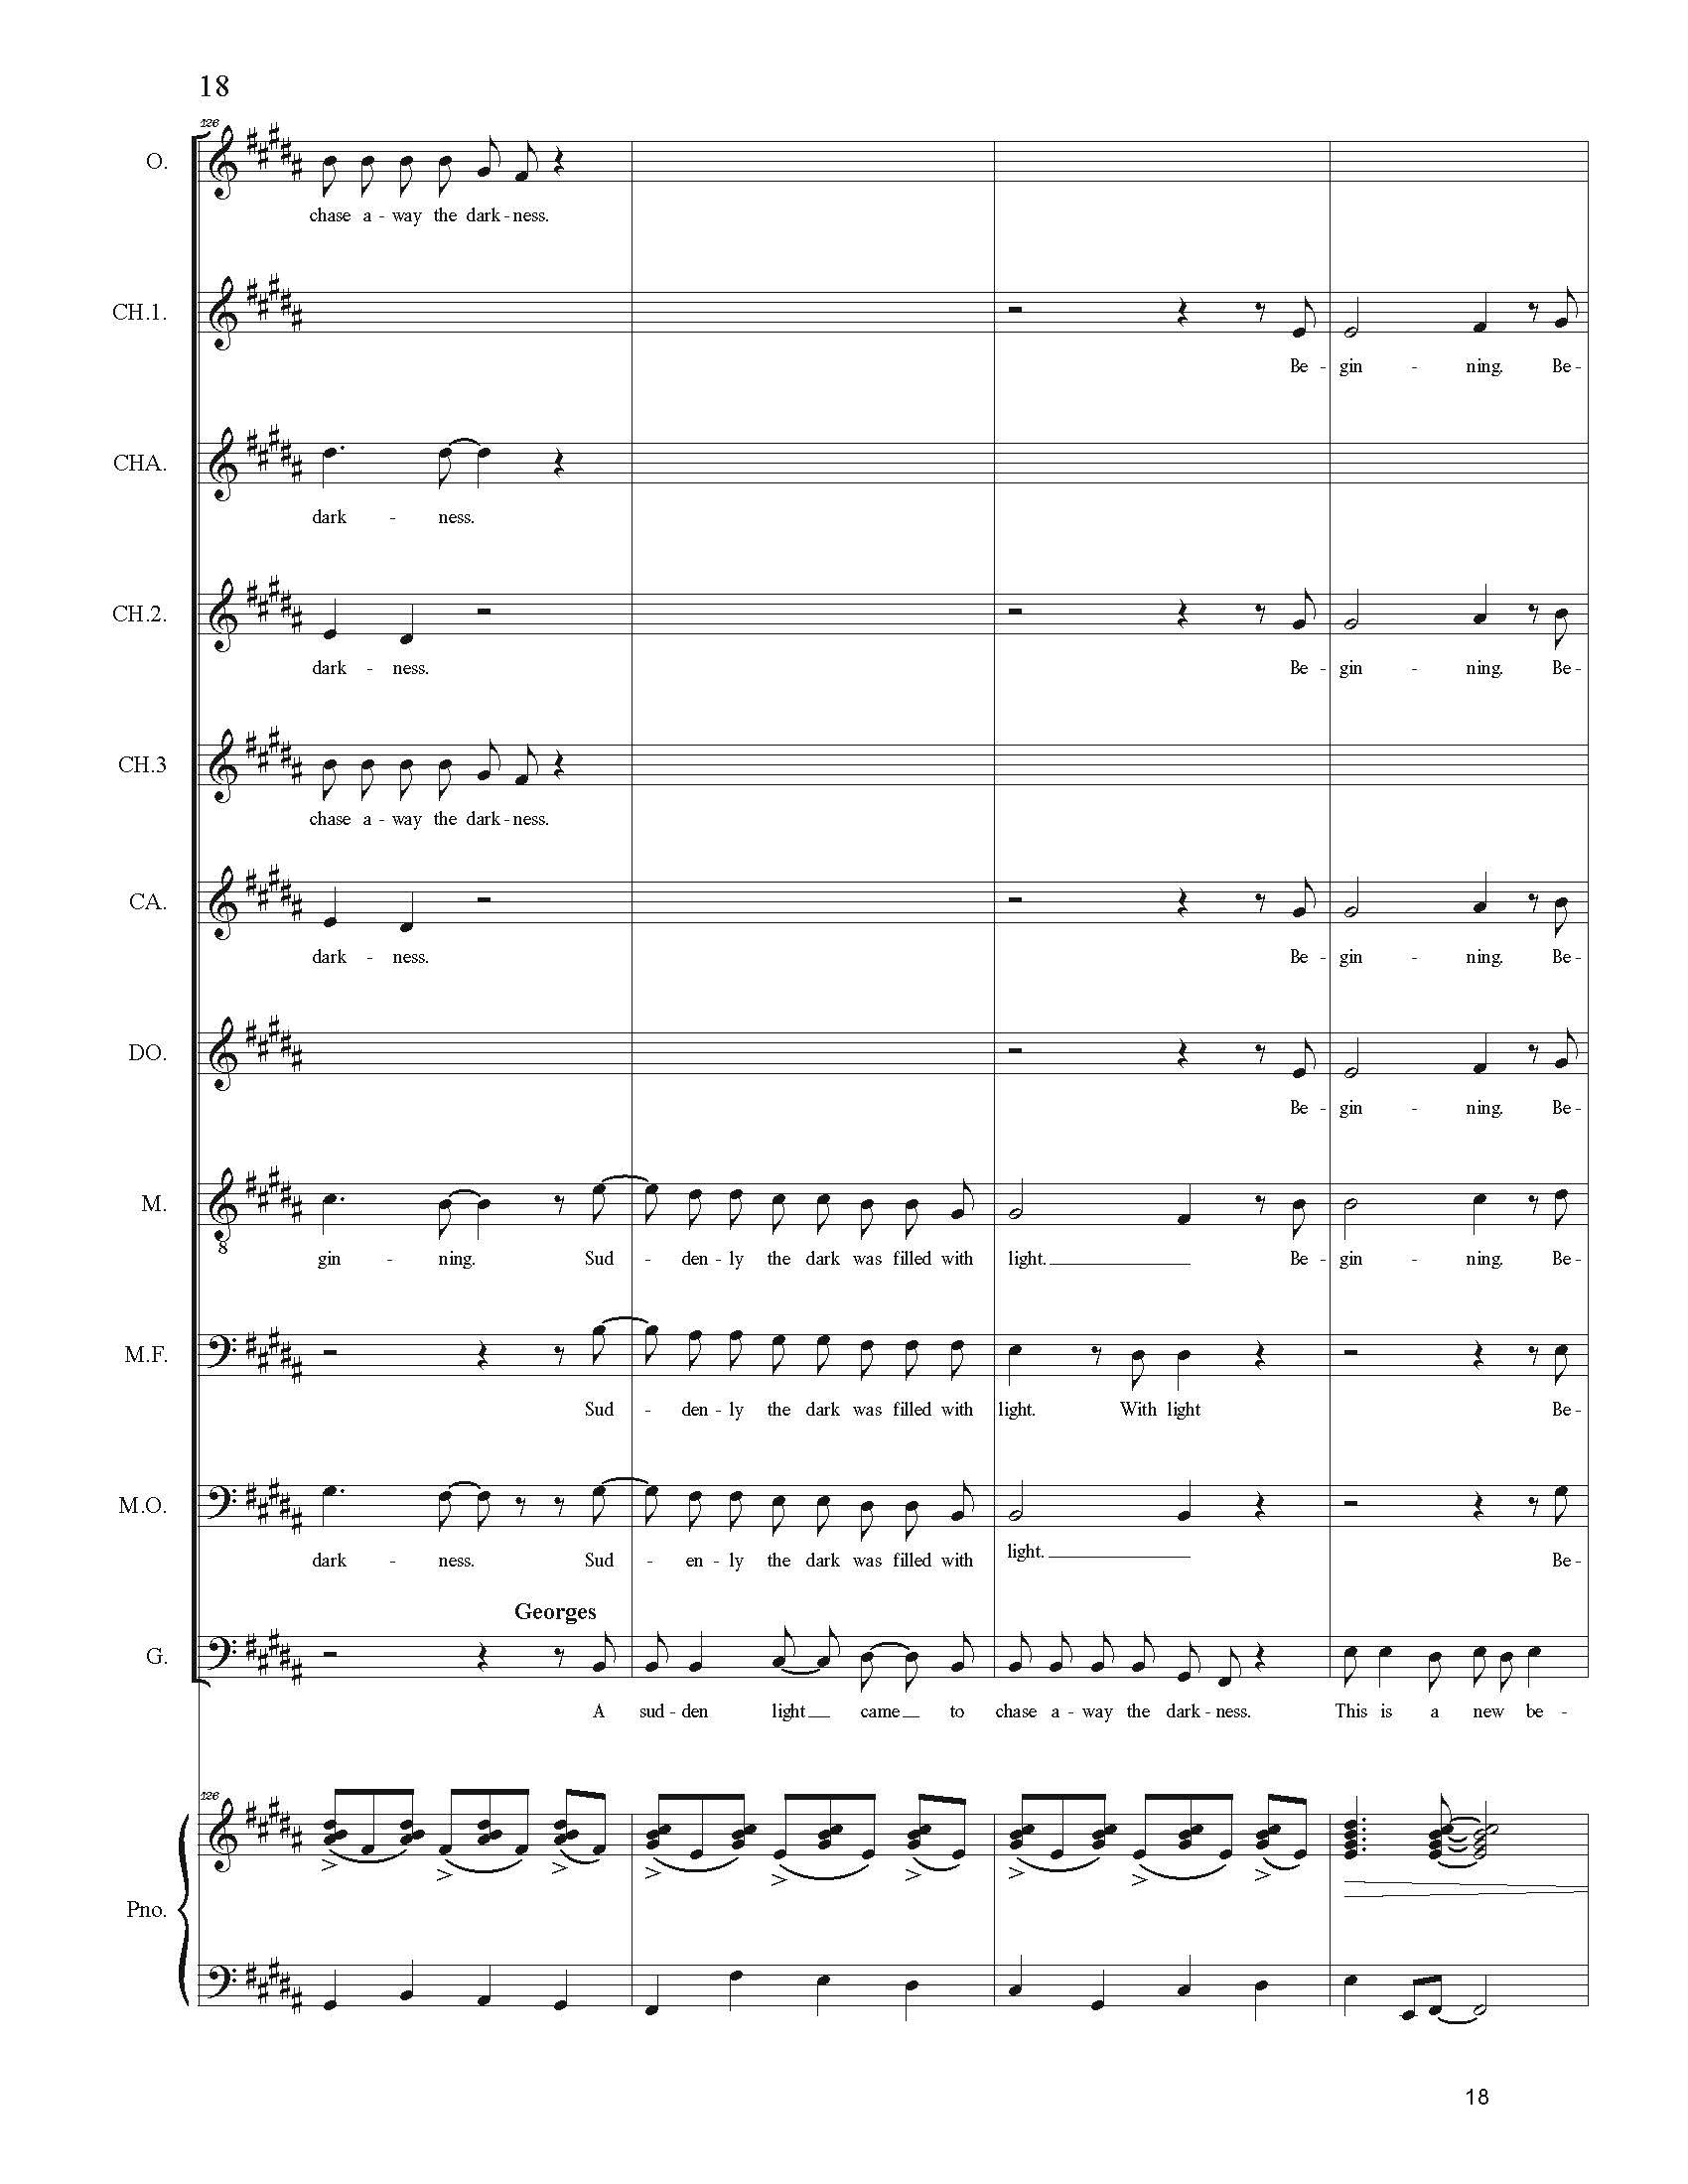 FULL PIANO VOCAL SCORE DRAFT 1 - Score_Page_018.jpg